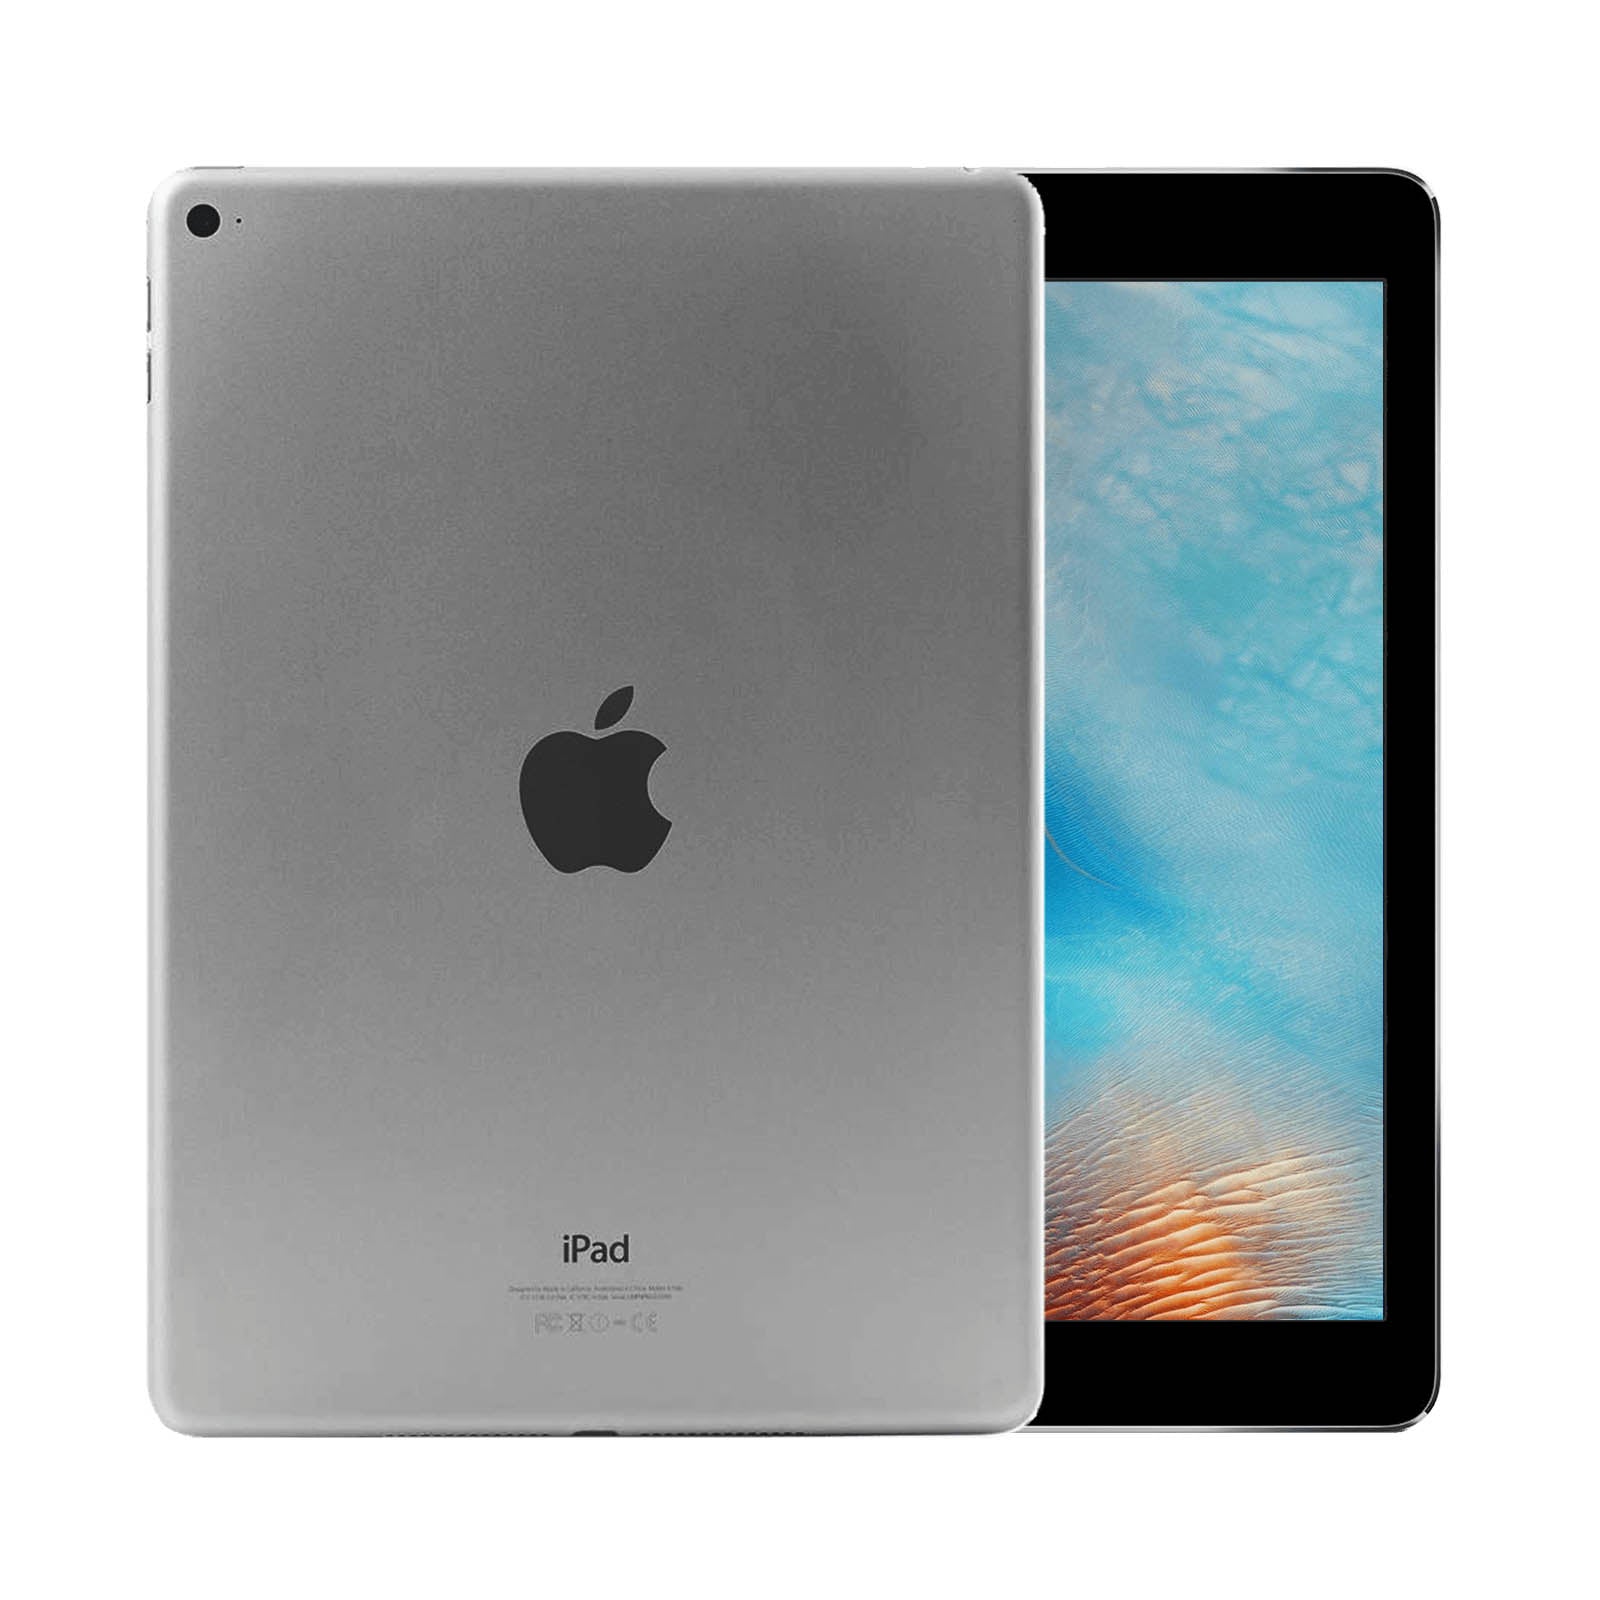 Apple iPad Air 2 32GB Space Grey Very Good - WiFi